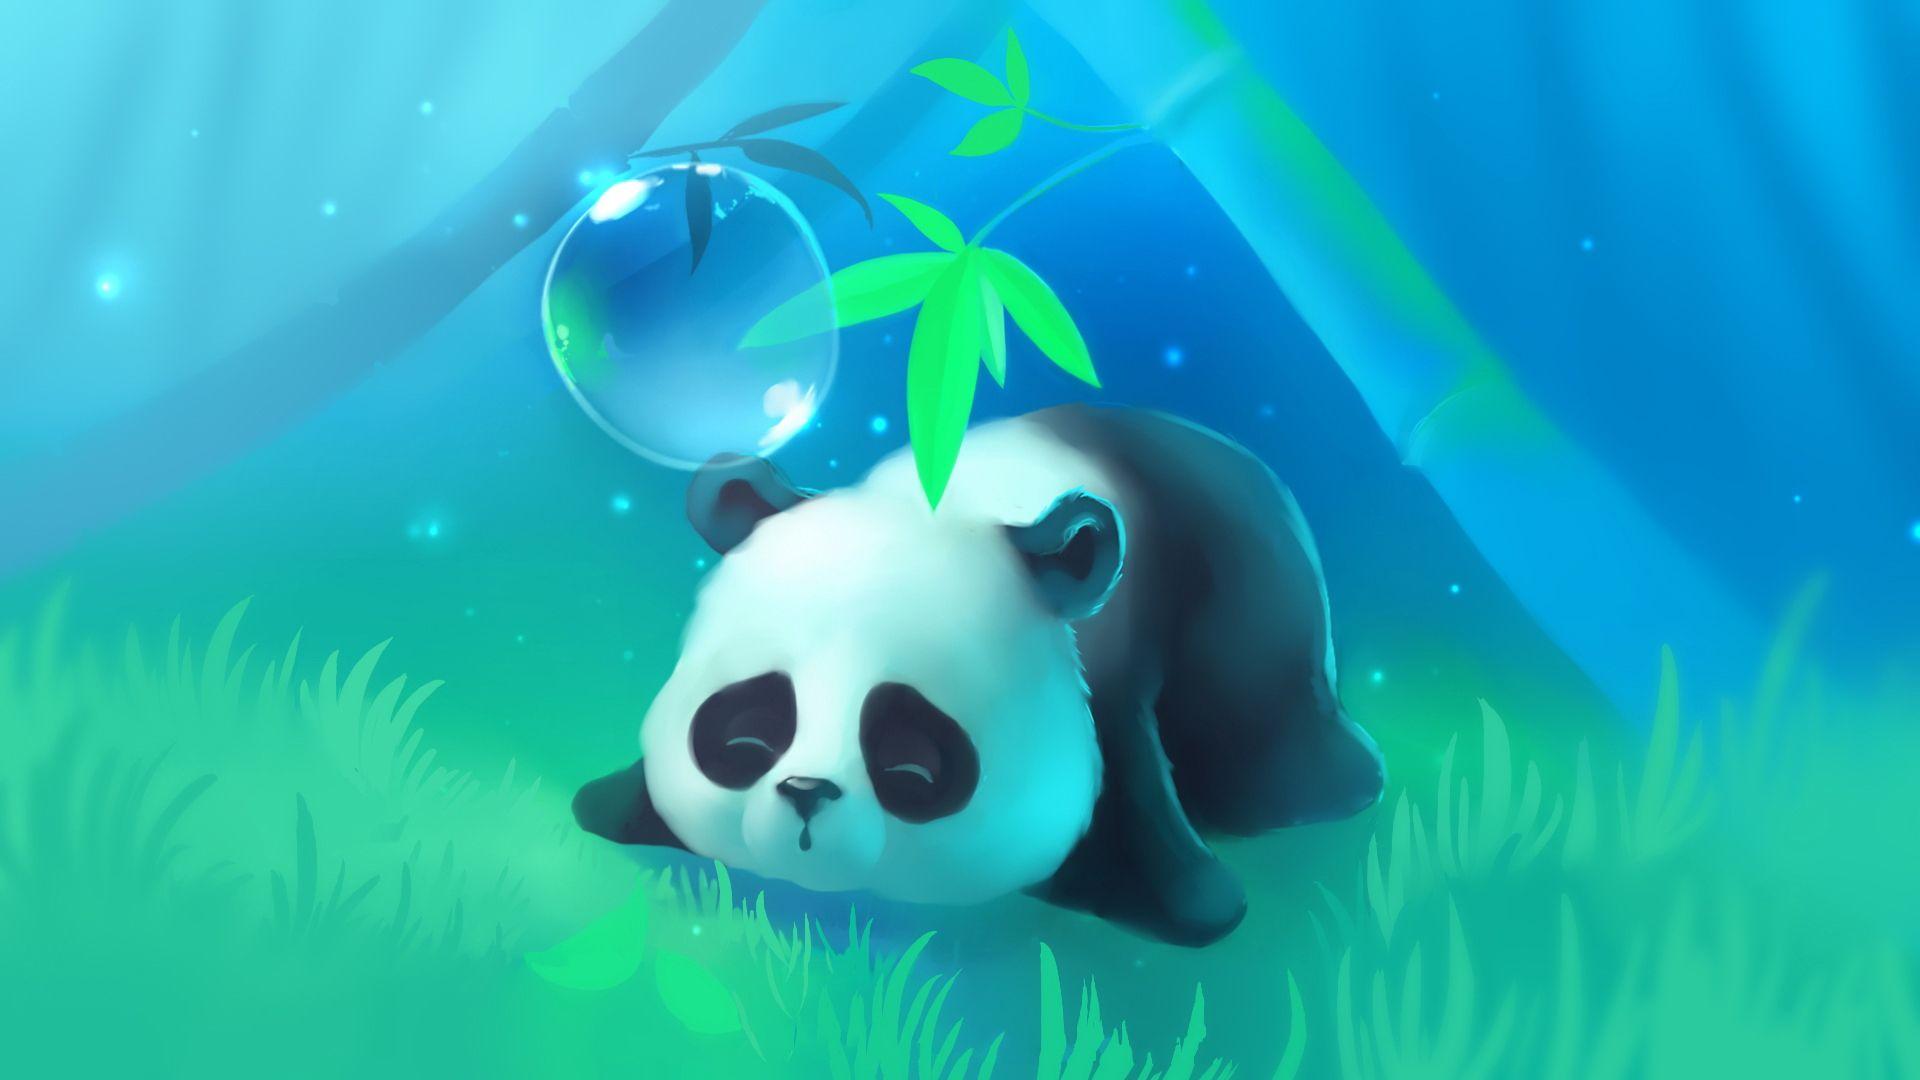 Panda Wallpaper Image Photo Picture Background 1024×768 Panda